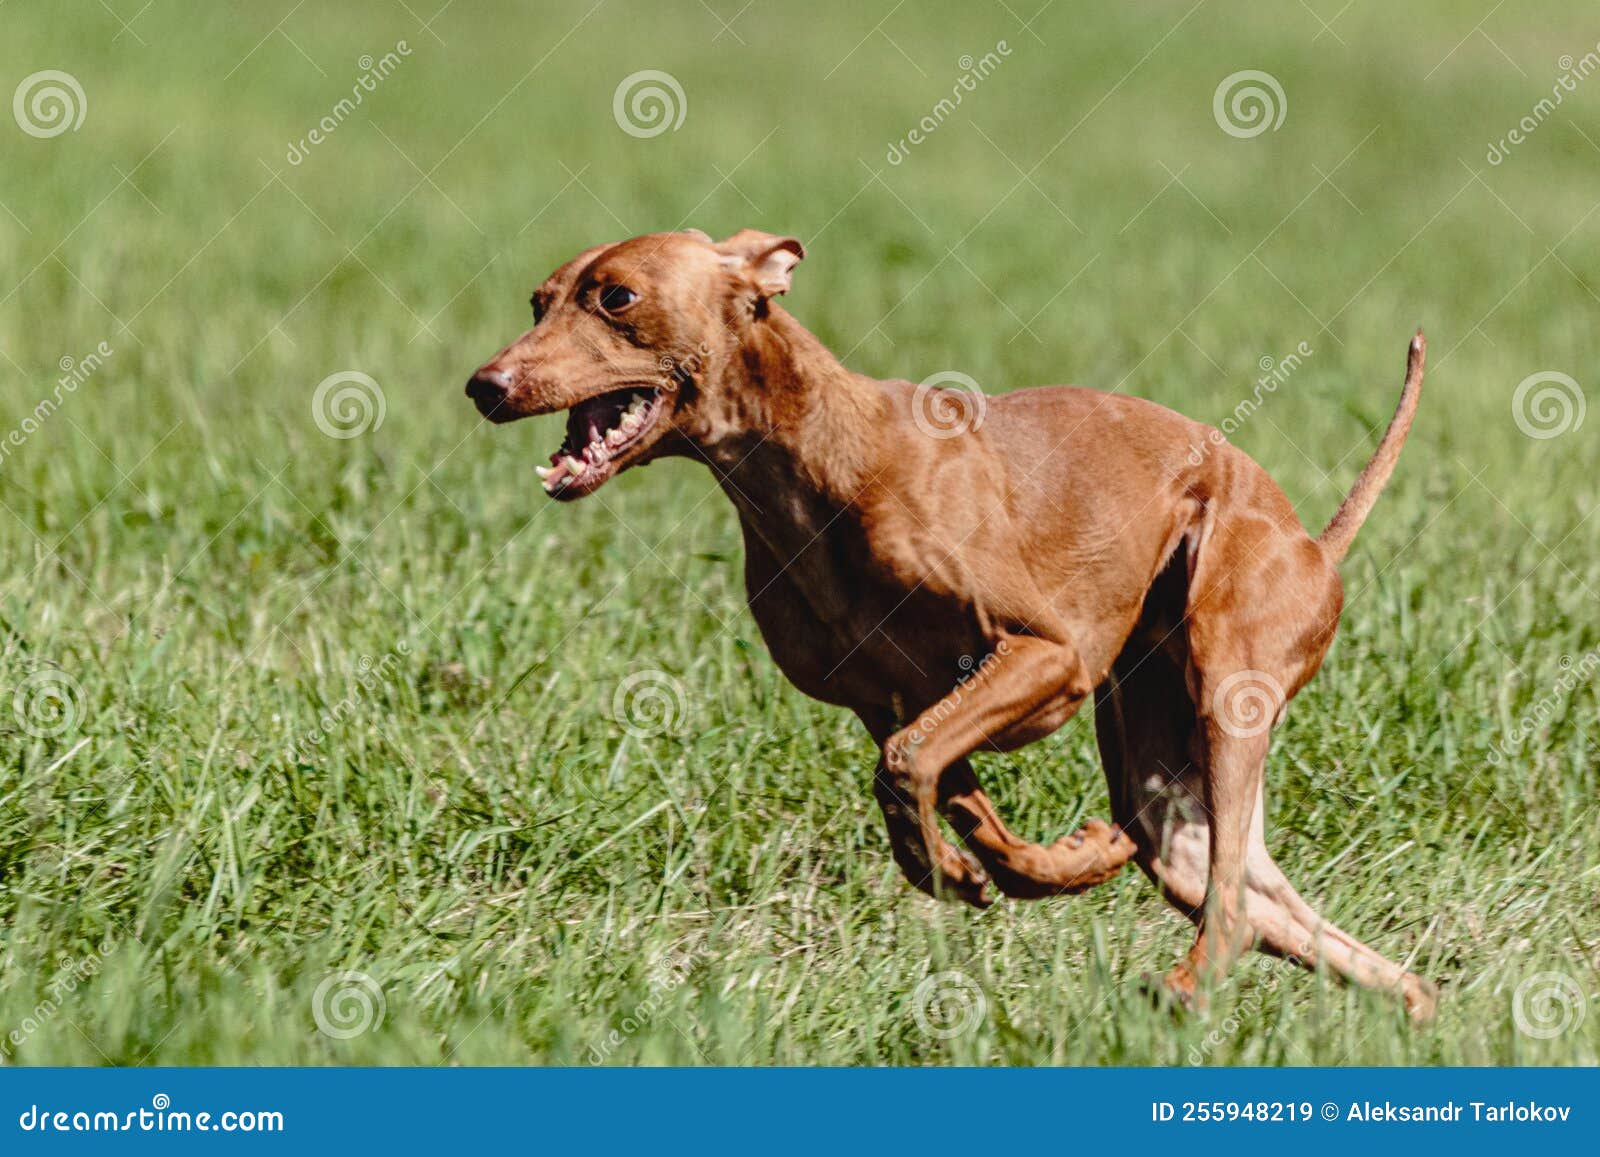 cirnecoÃÂ dell etna dog running fast and chasing lure across green field at dog racing competion